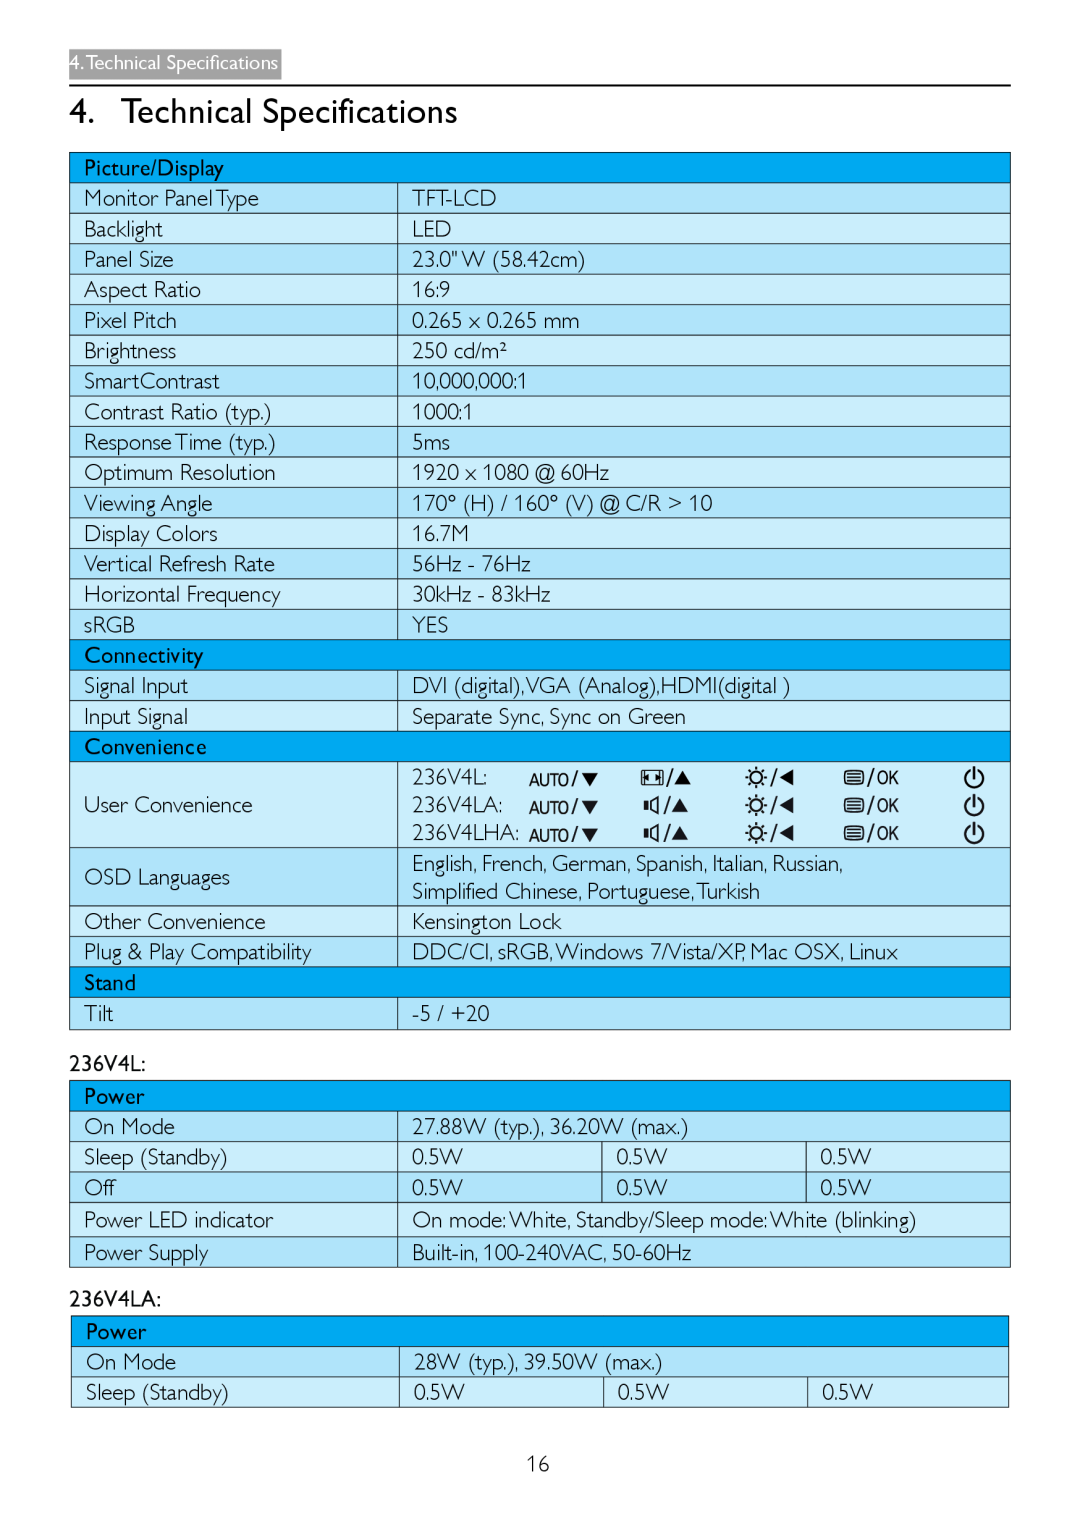 Philips 236V4 user manual Technical Specifications, 10,000,0001, 1920 x 1080 @ 60Hz, DVI digital,VGA Analog,HDMIdigital 